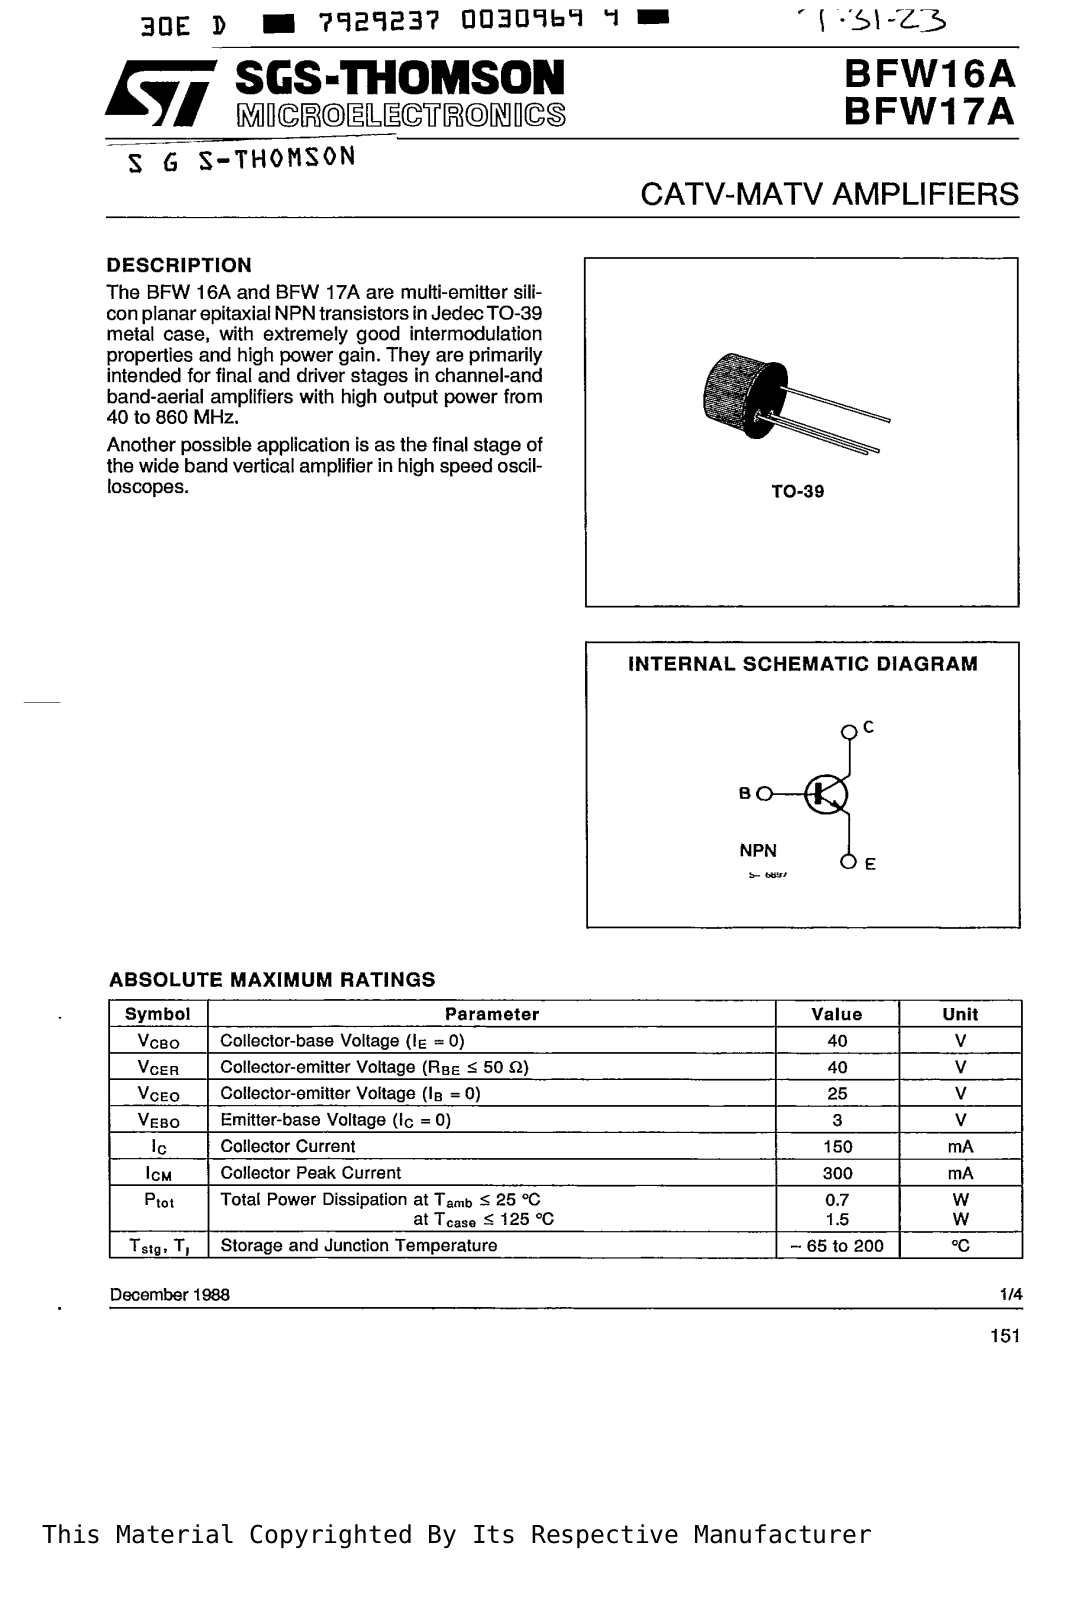 SGS Thomson Microelectronics BFW16A Datasheet